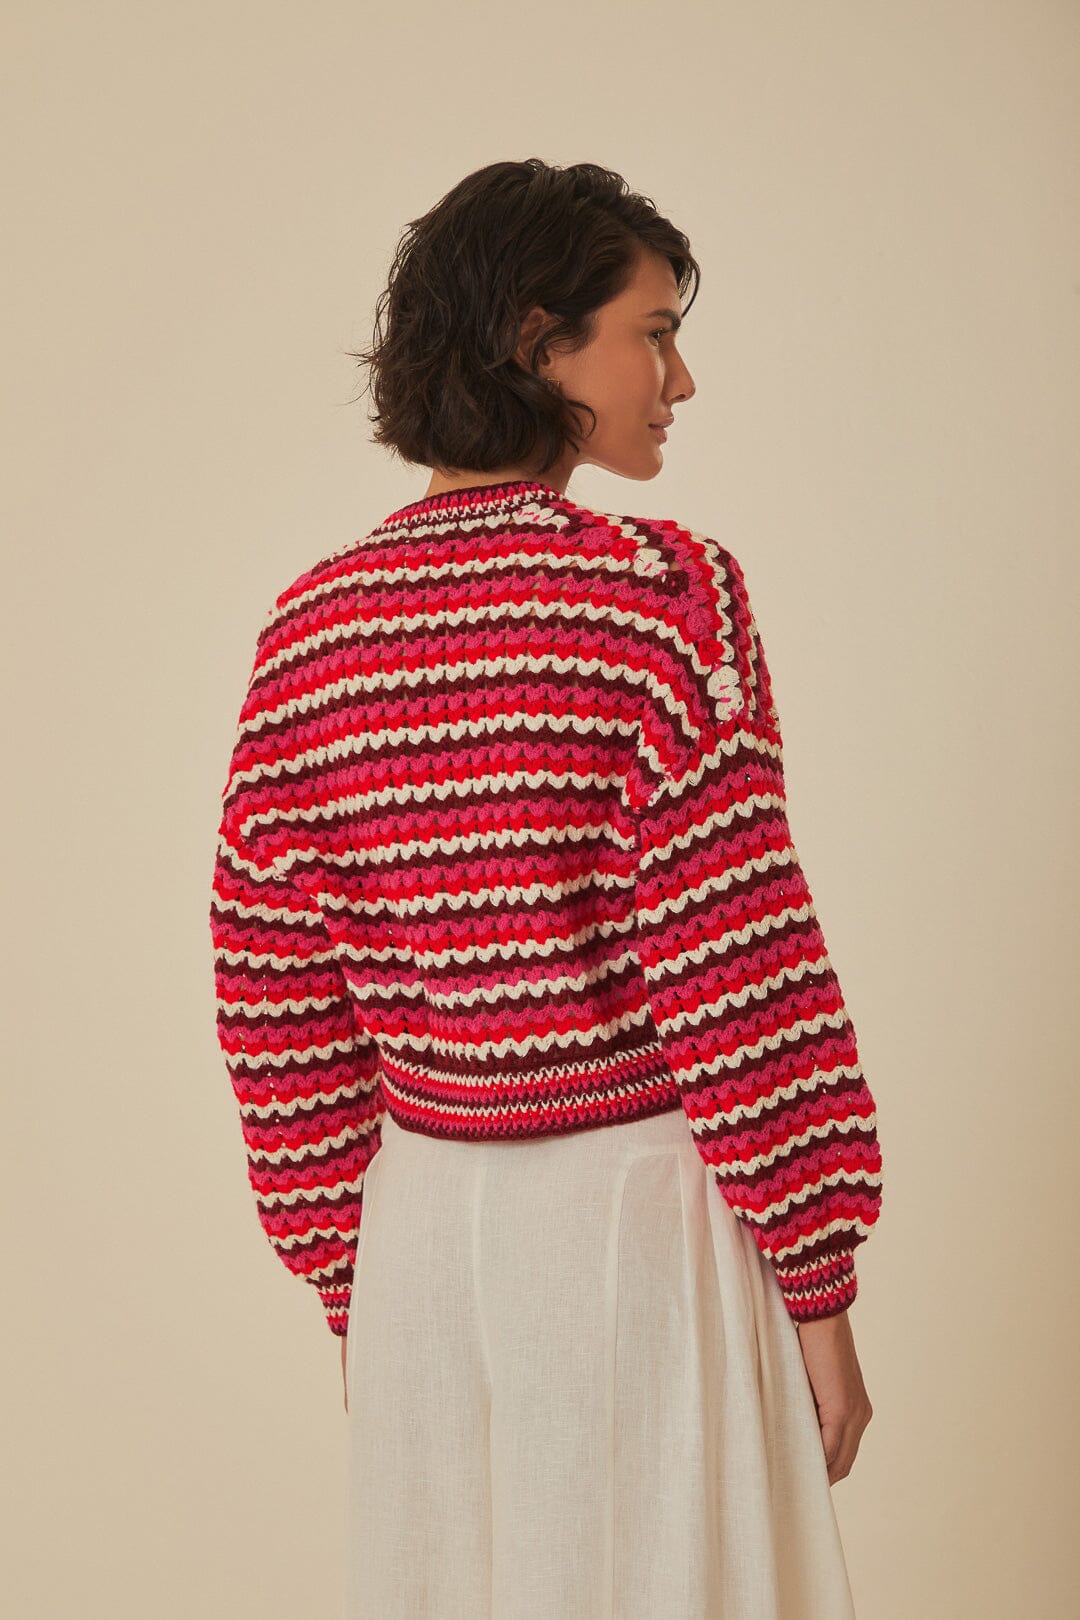 Colorful Stripes Crochet Cardigan